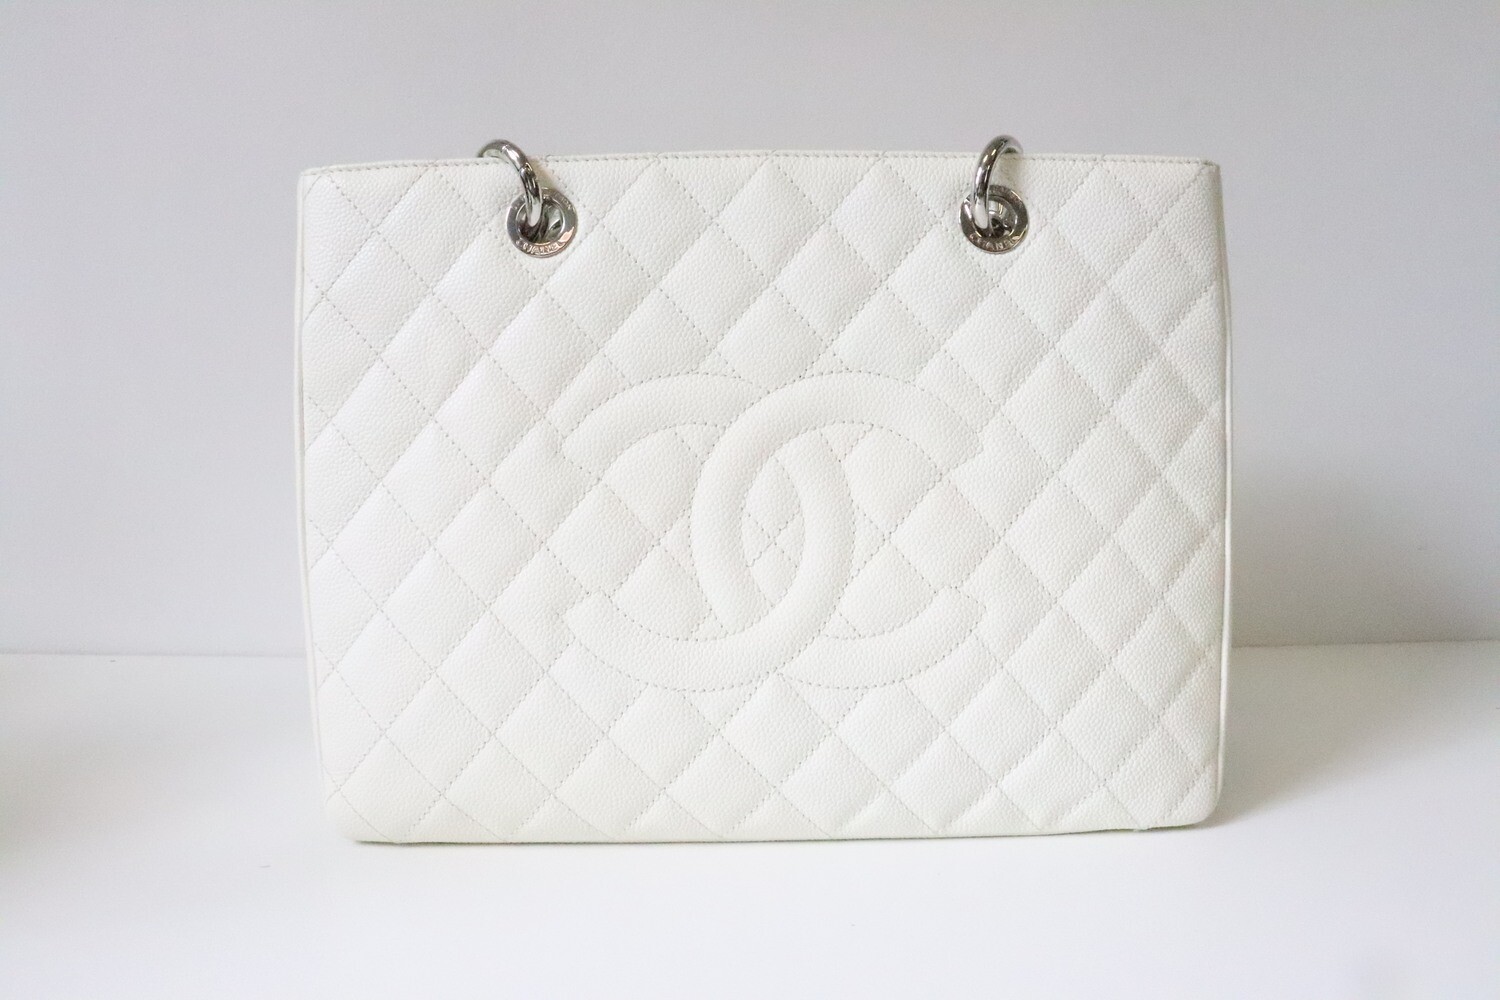 Chanel Grand Shopping Tote Bag GST, Ecru Caviar Leather, Silver Hardware,  Preowned in Dustbag - Julia Rose Boston